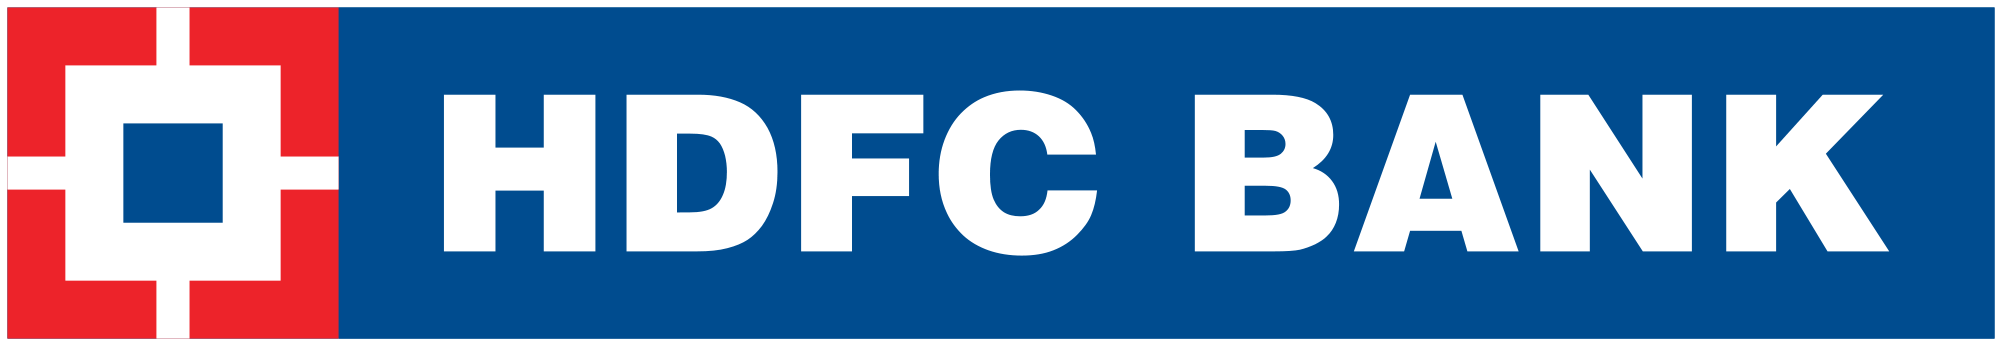 HDFC Bank Logo - File:HDFC Bank Logo.svg - Wikimedia Commons